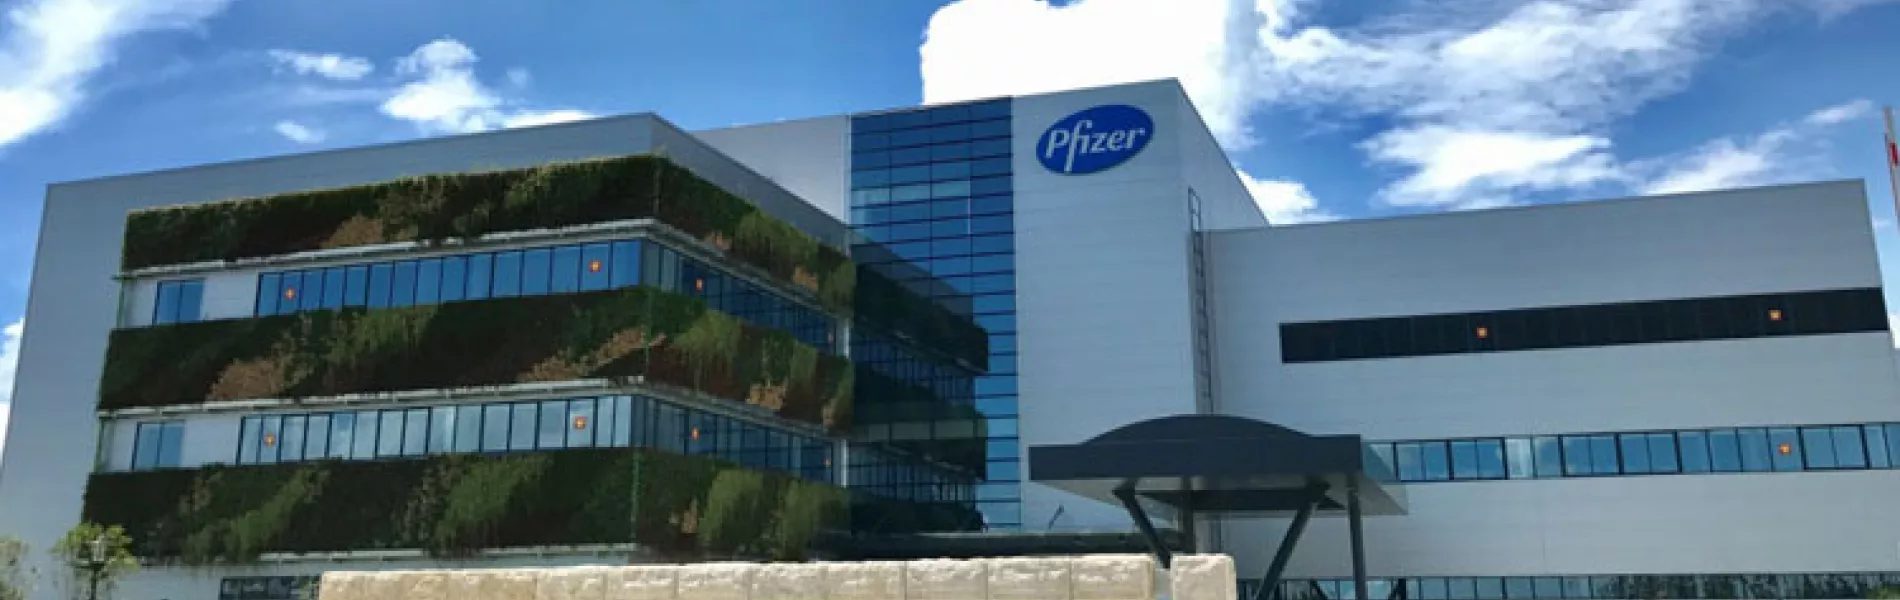 Wyeth, a Pfizer Company – 2018 Facility of the Year Awards Category Winner for Sustainability 